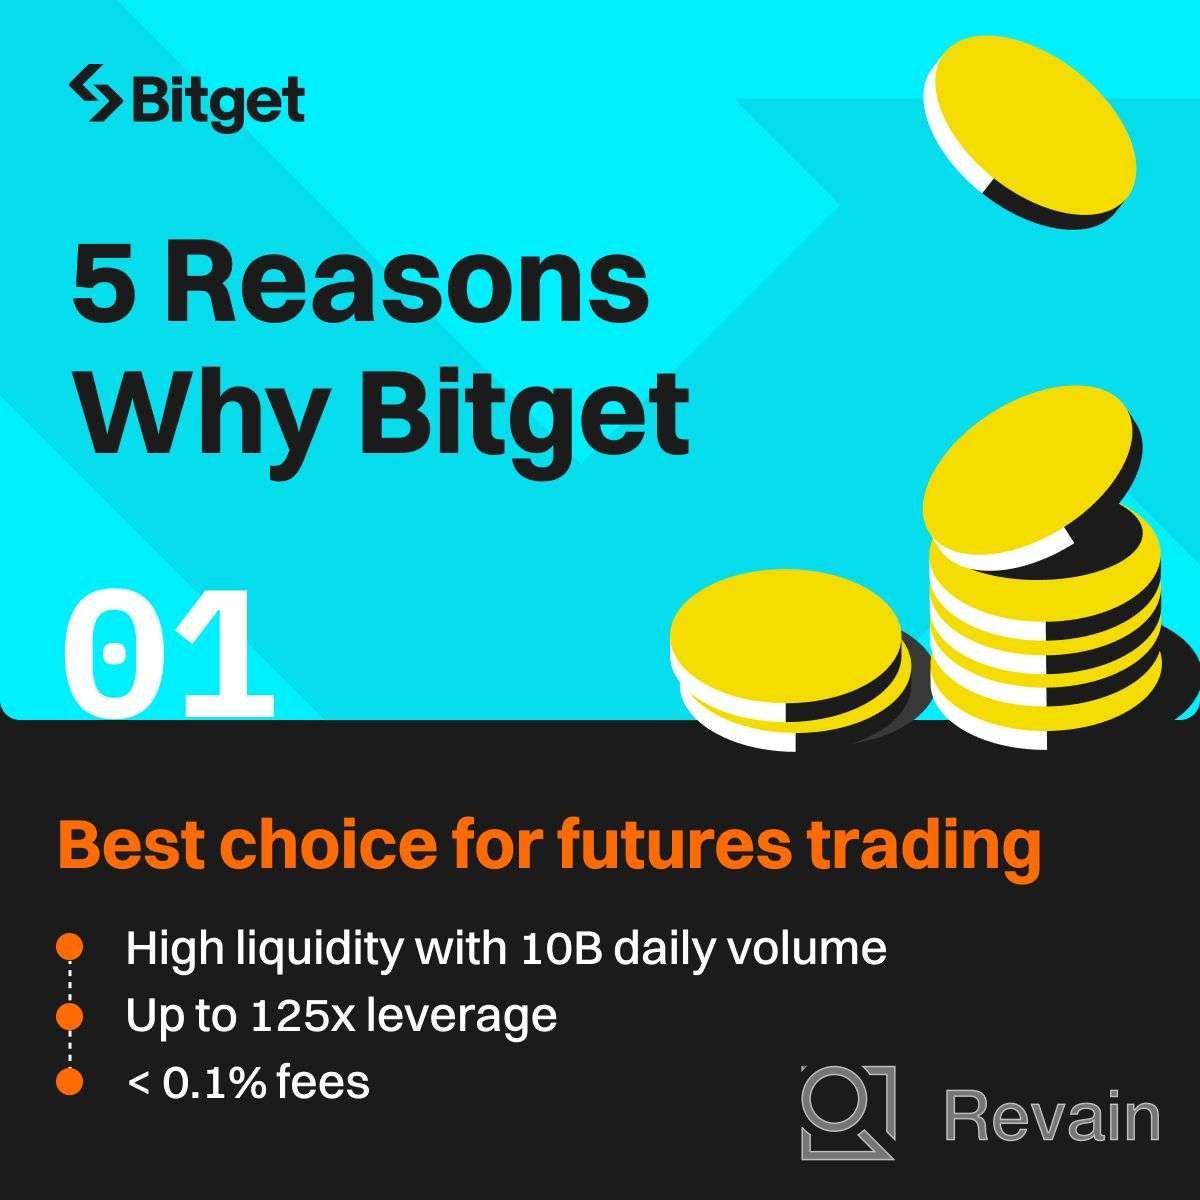 5 reasons why Bitget - 1